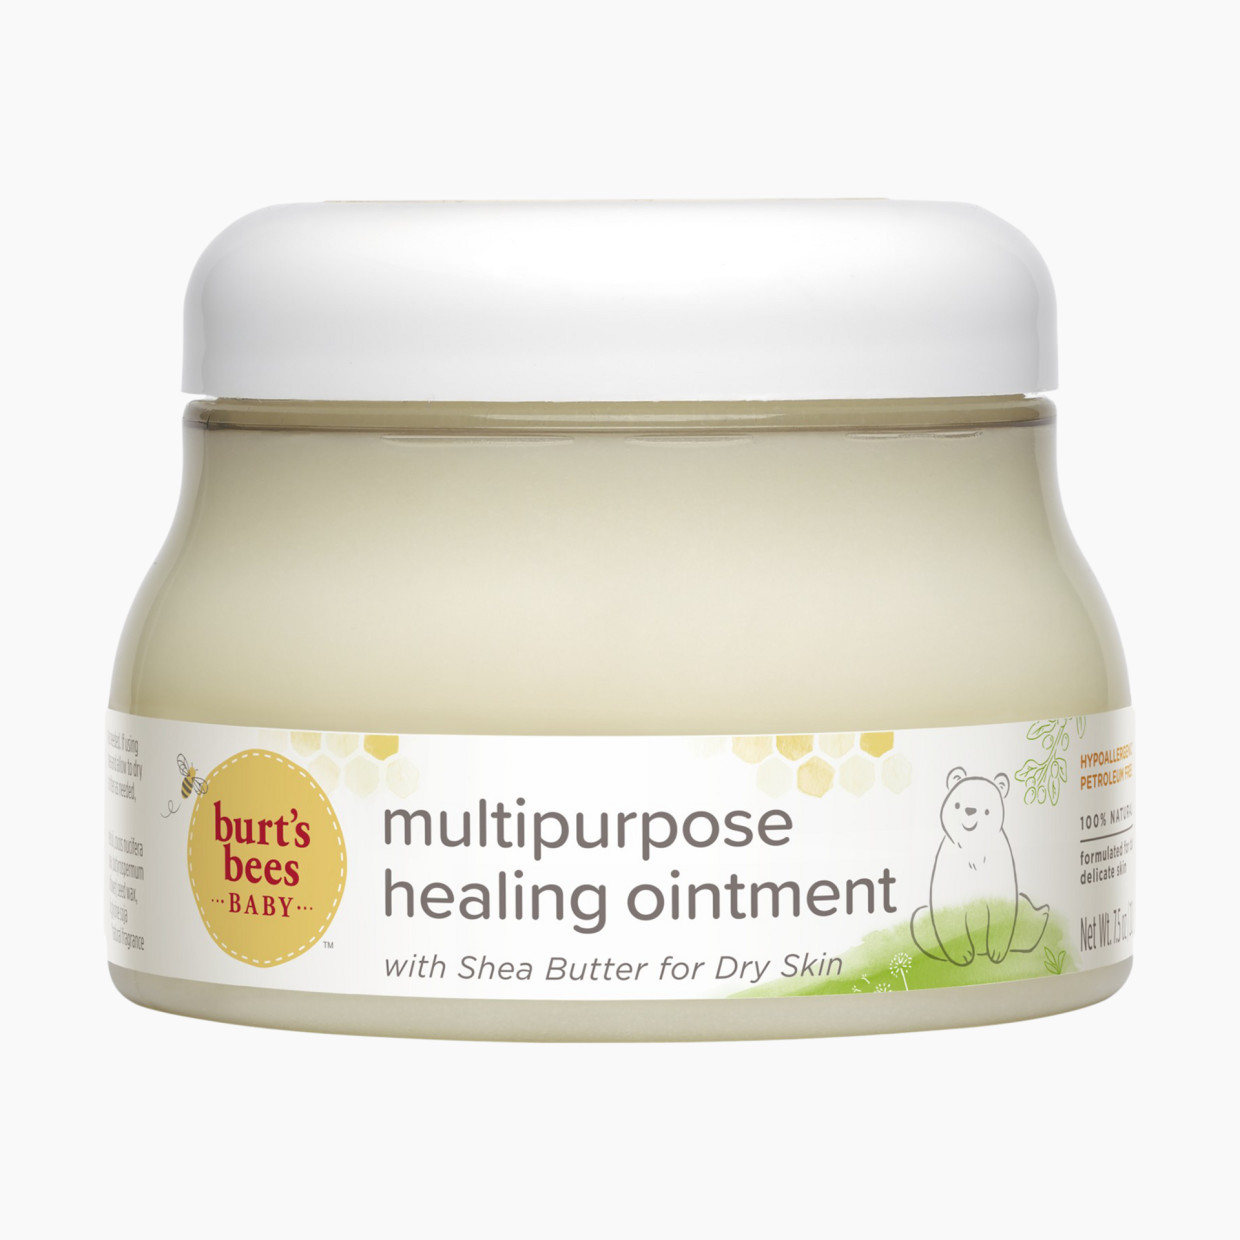 Burt's Bees Baby Multipurpose Healing Ointment - 7.5 Oz.